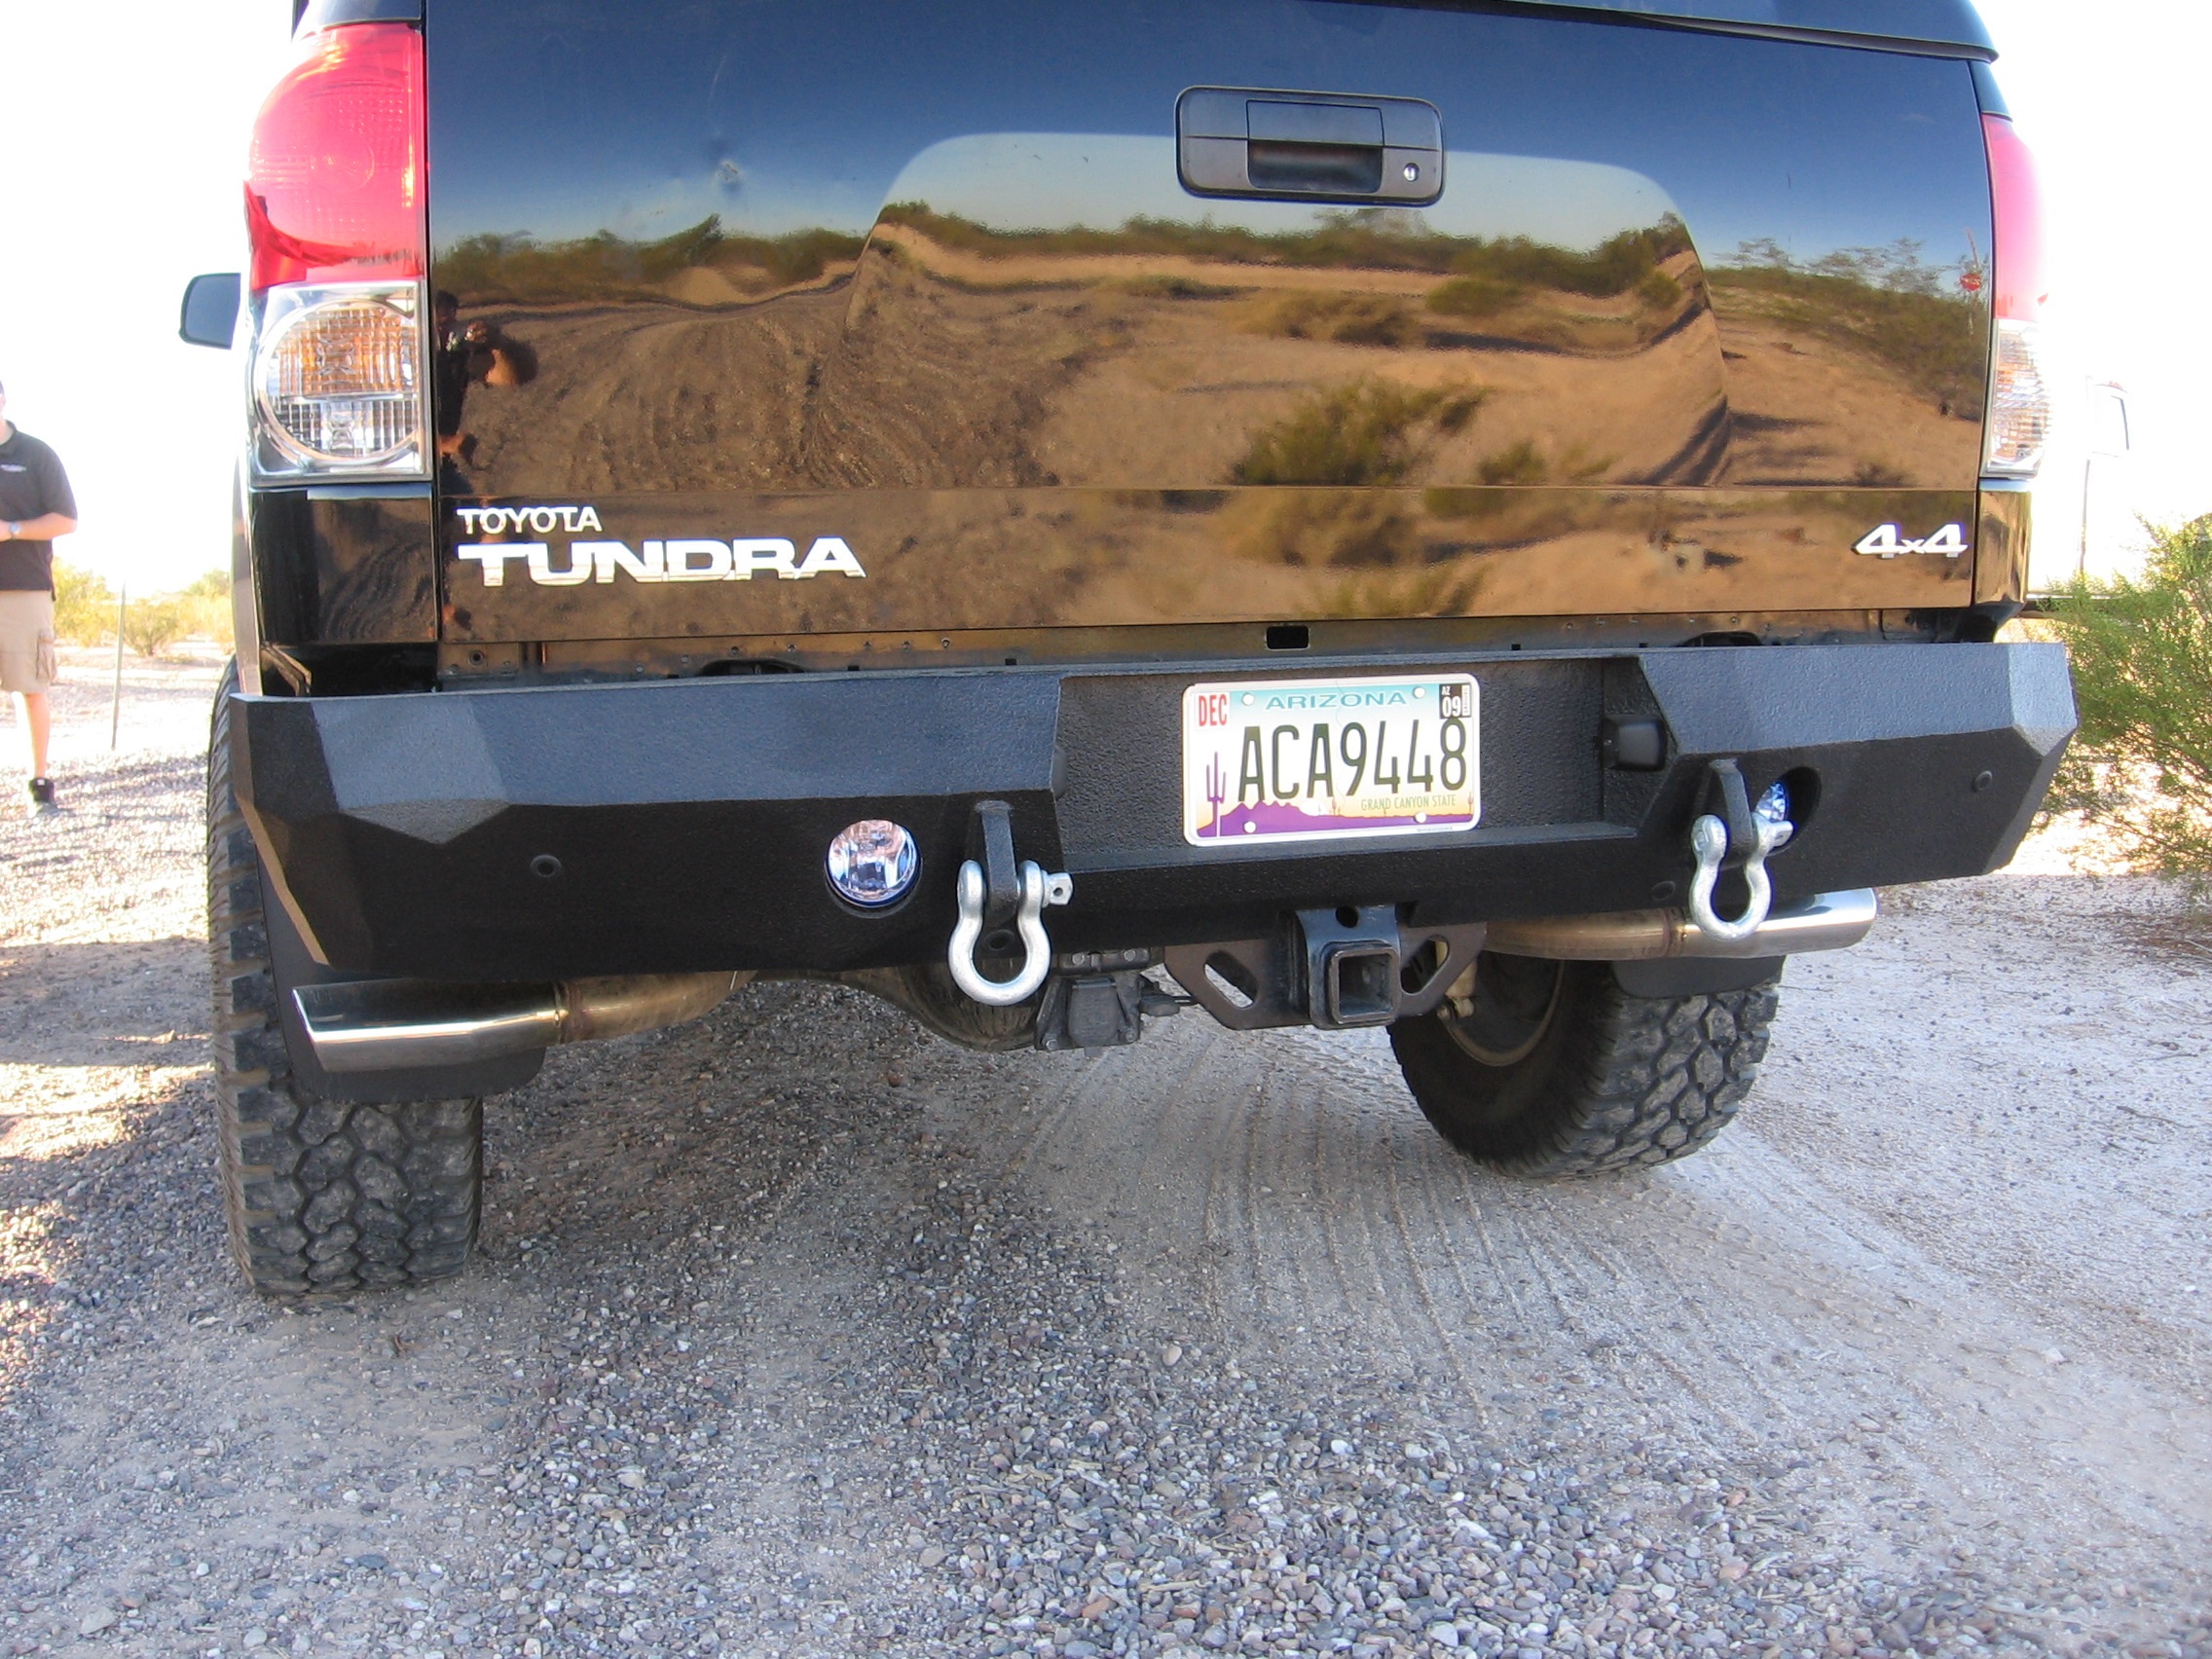 07-13 Toyota Tundra Rear Base Bumper